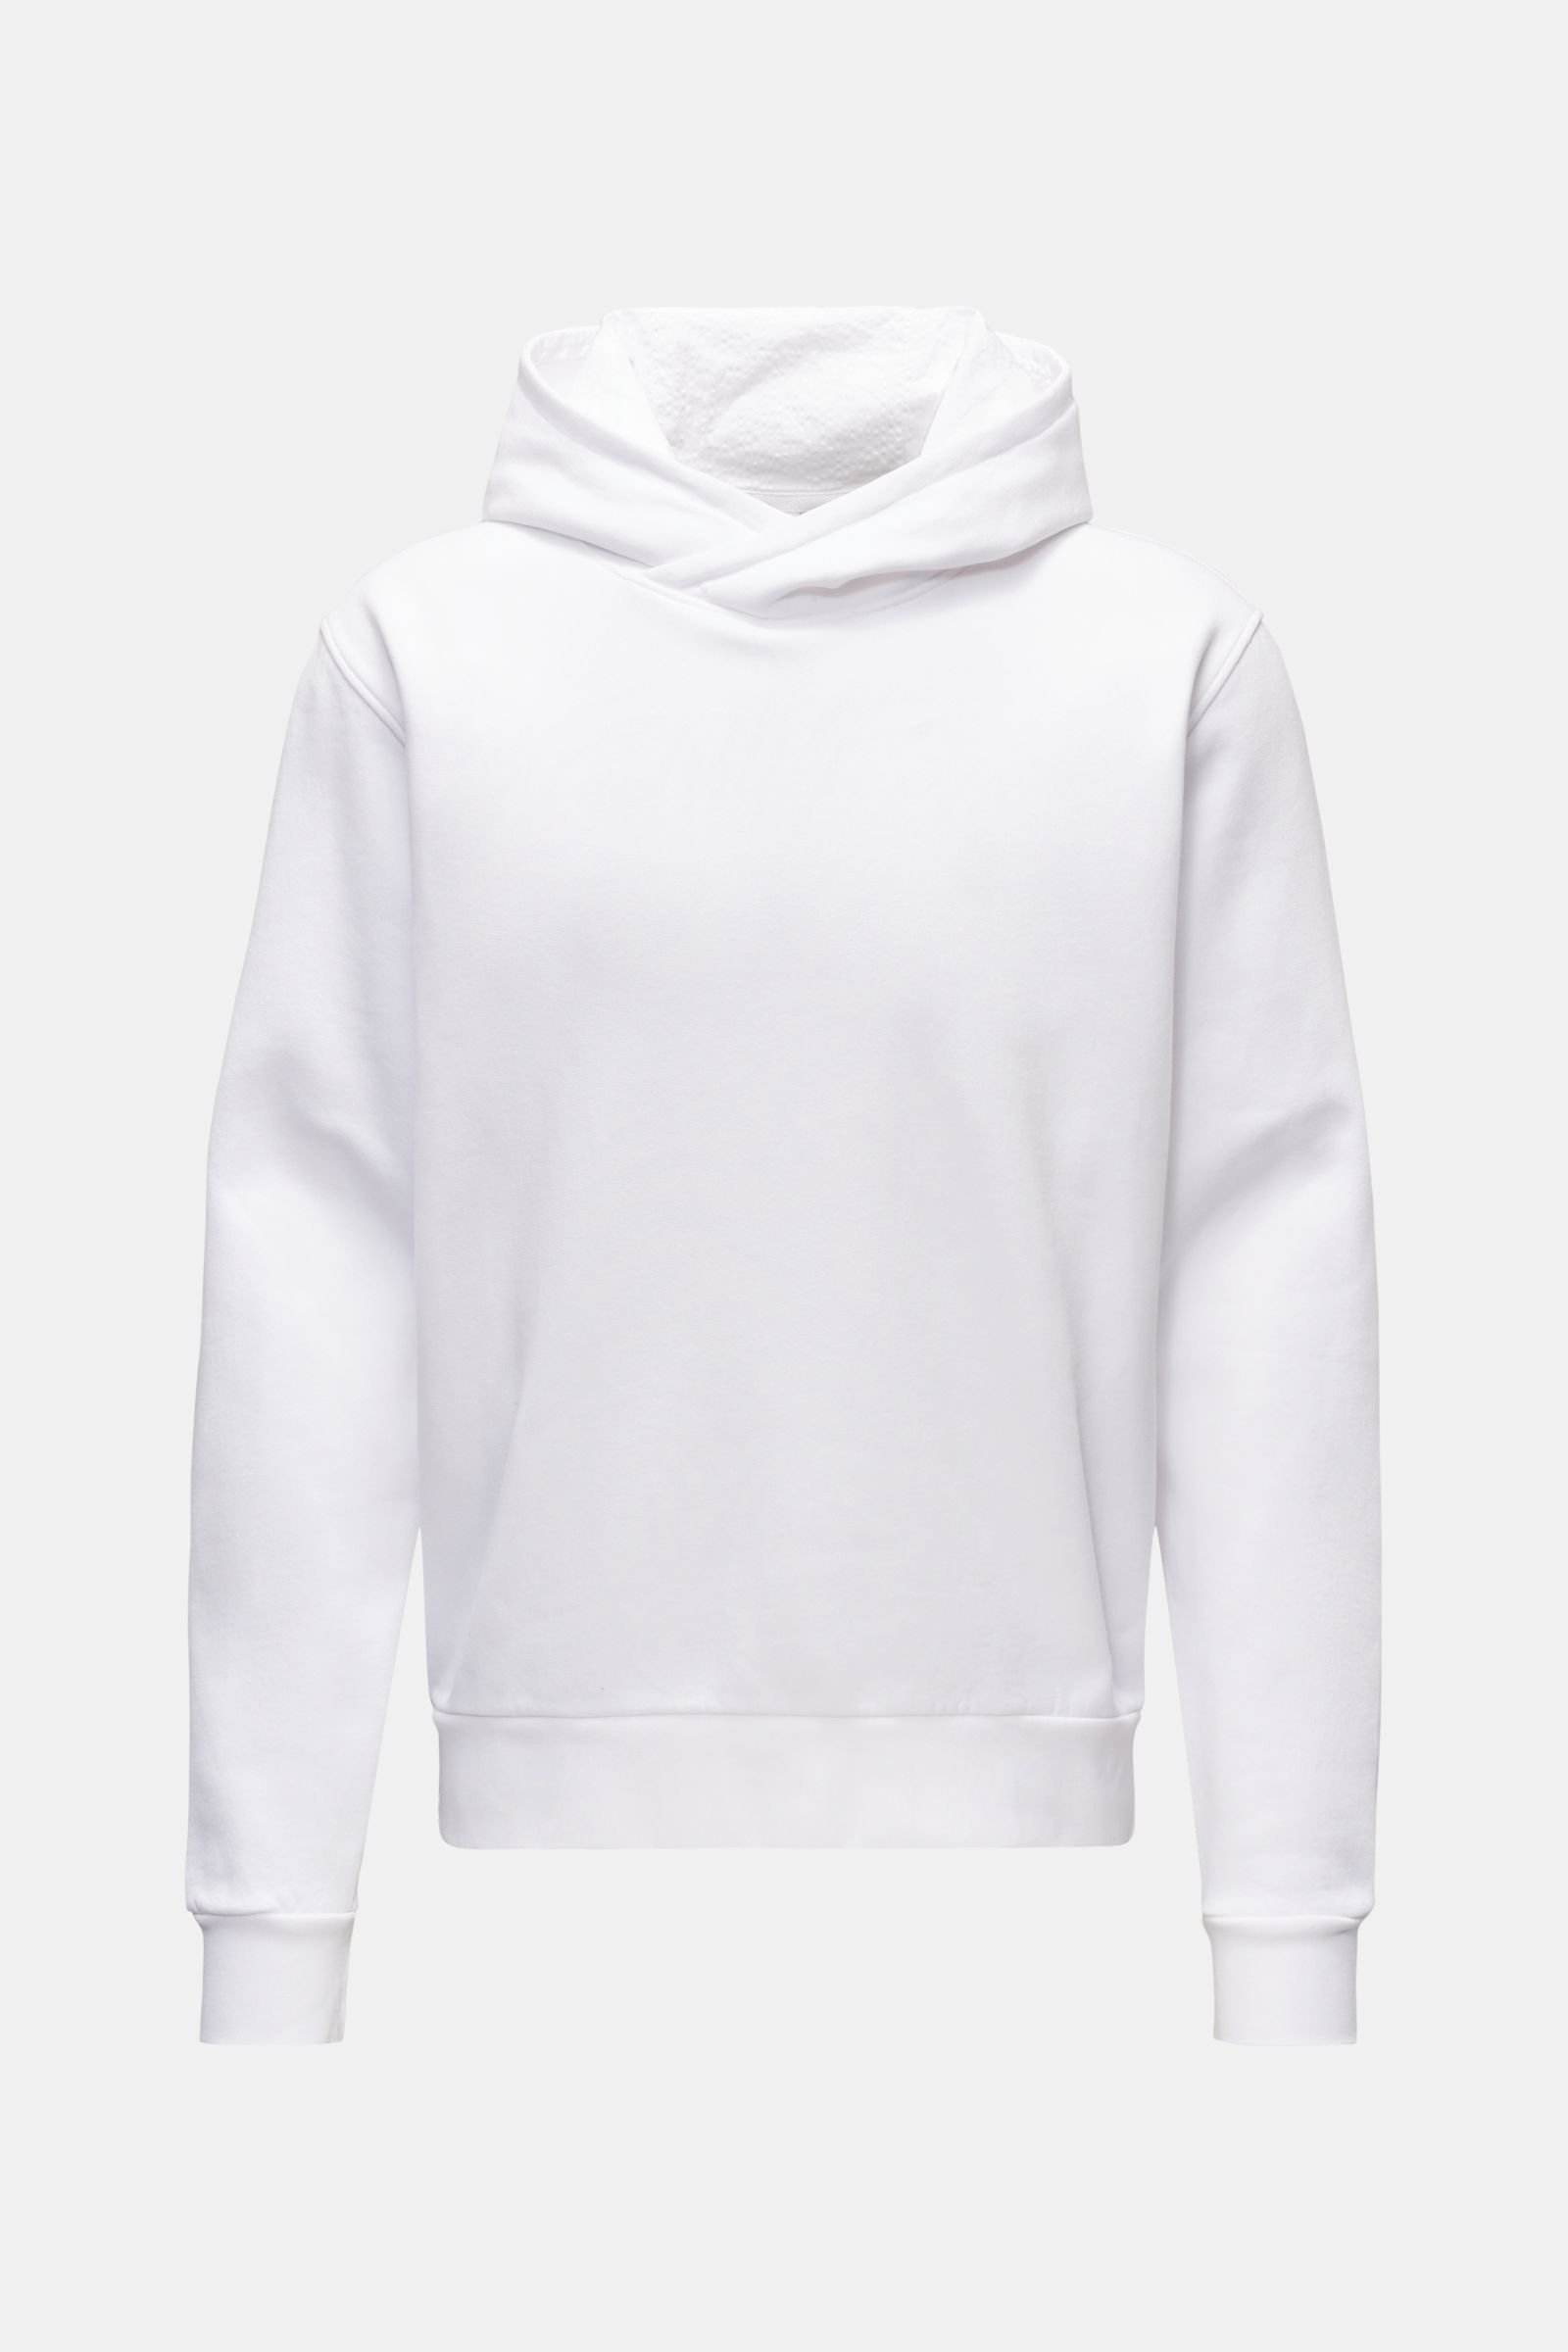 Hooded jumper 'AF Hoody' white